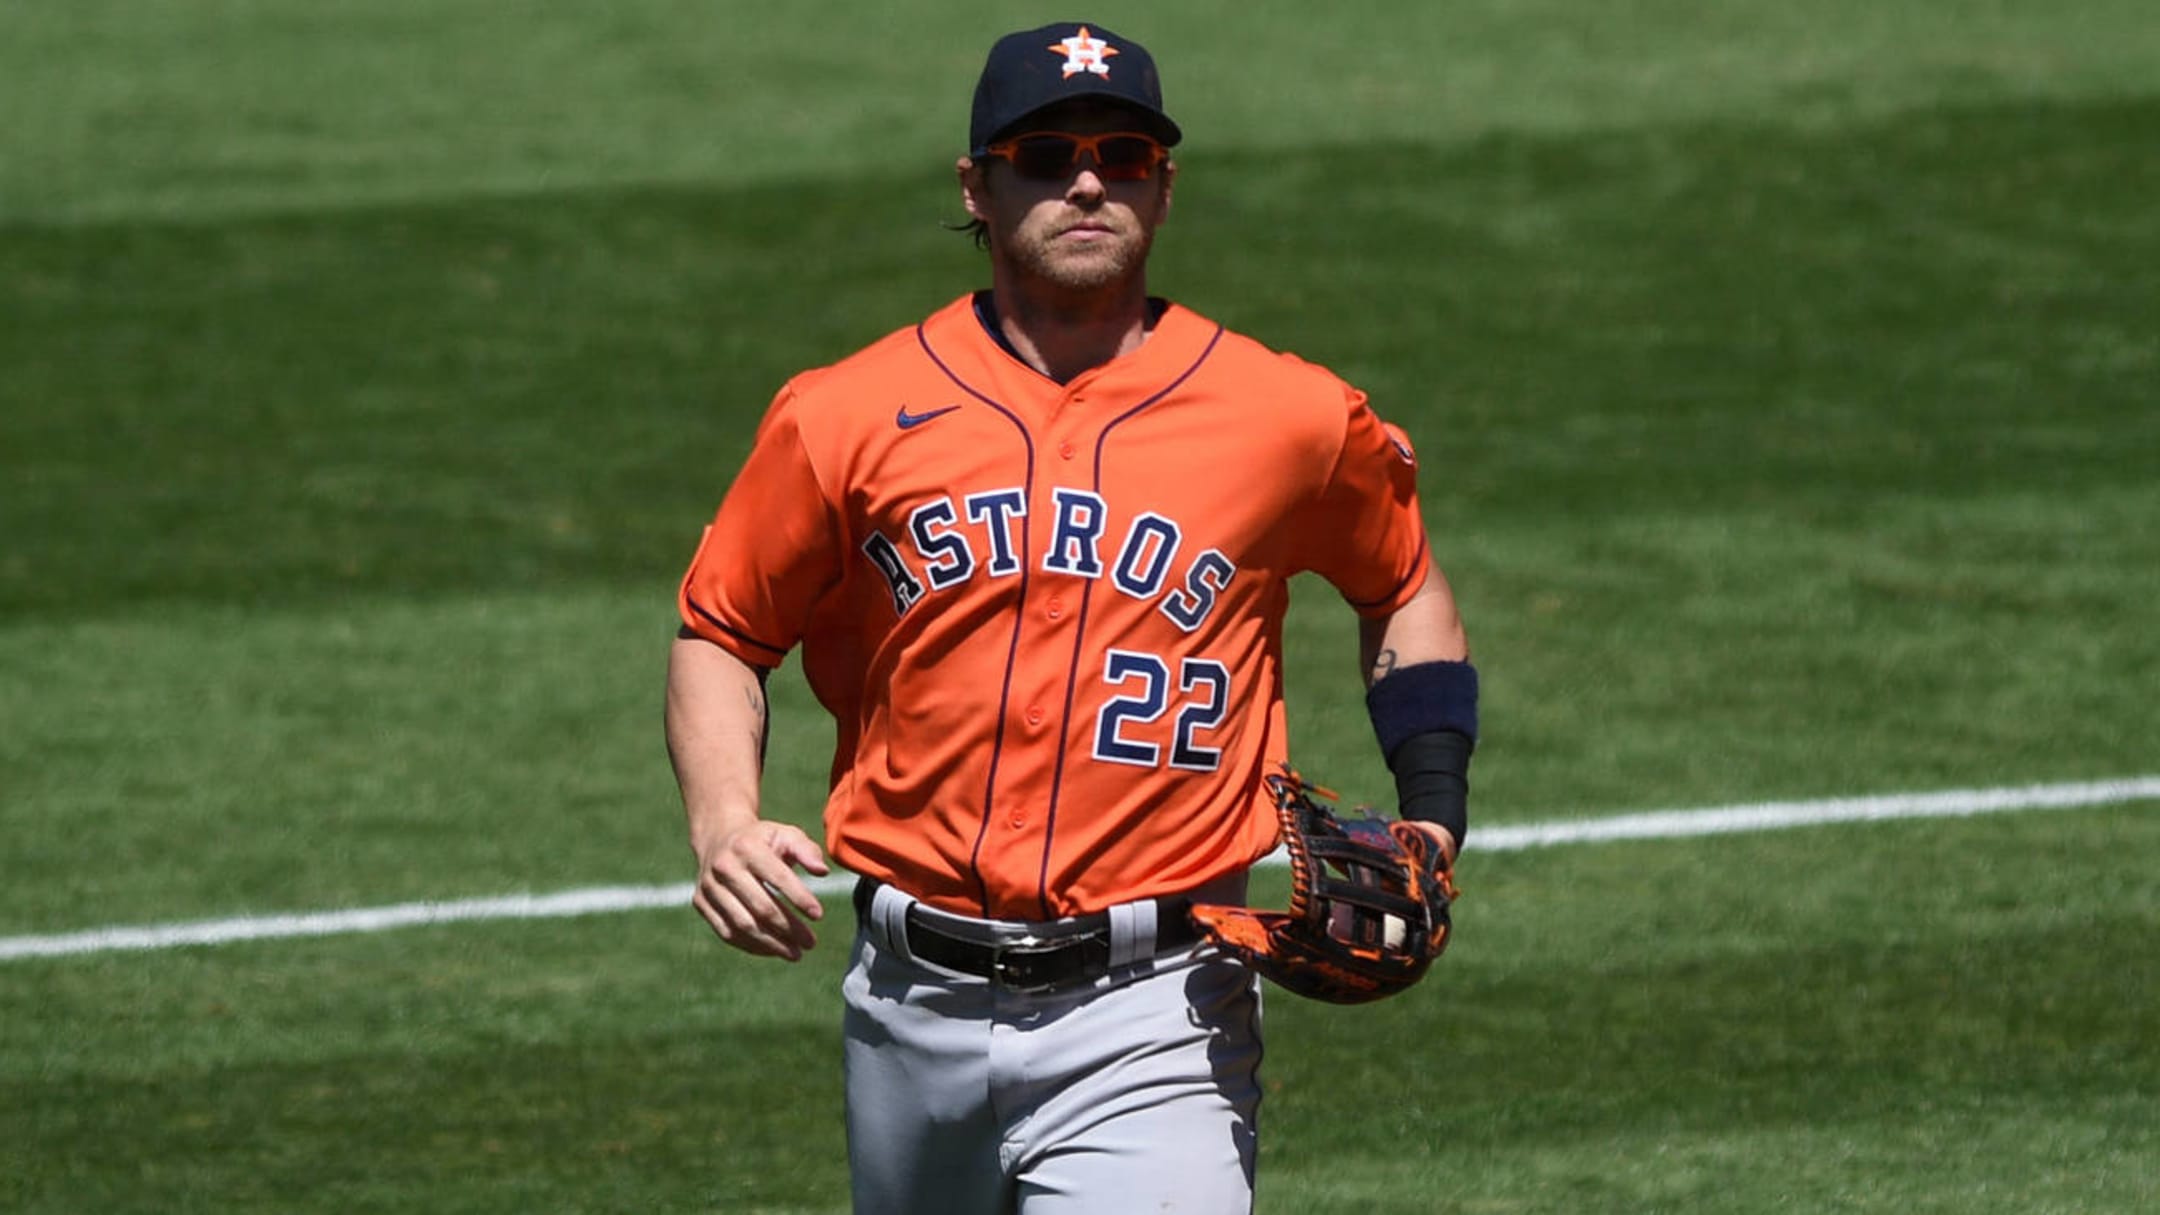 2019 Game-Used Josh Reddick Los Astros Orange Jersey (Size 46)